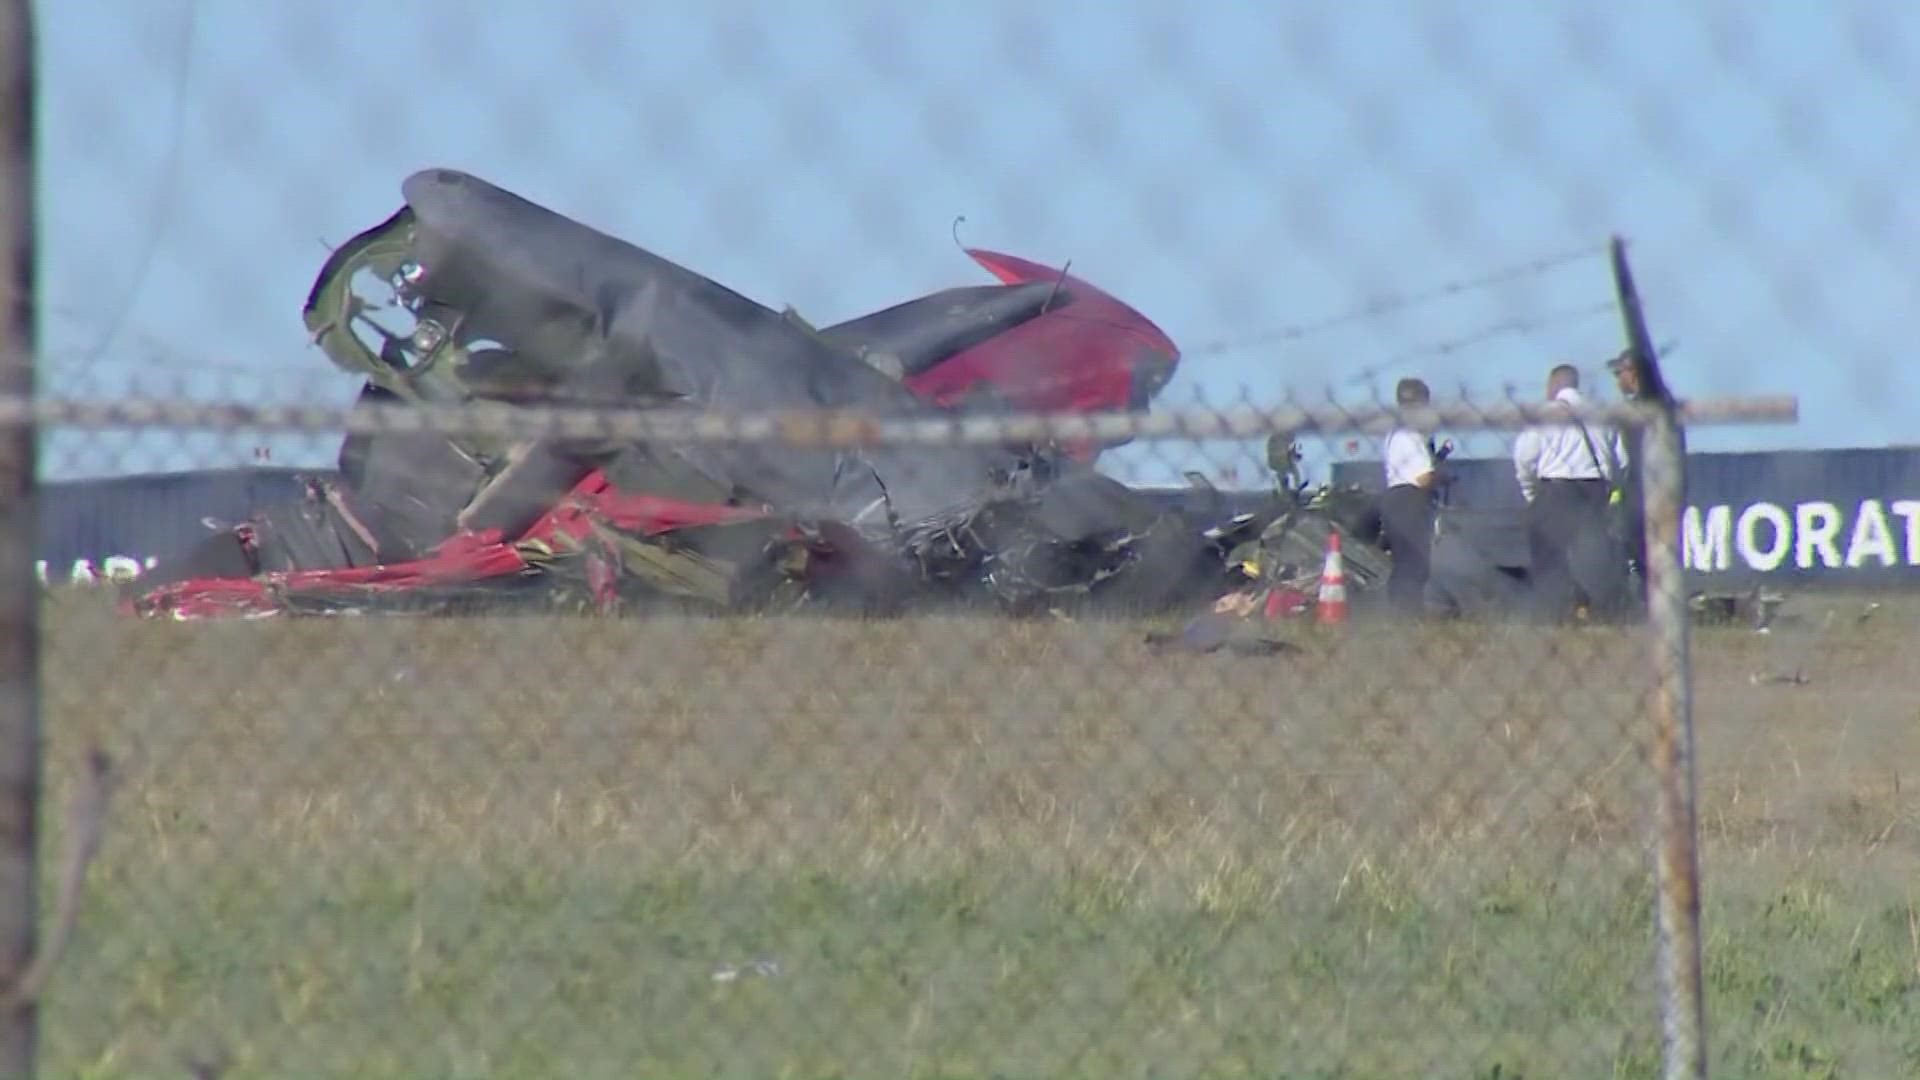 Six killed in midair collision at Dallas air show